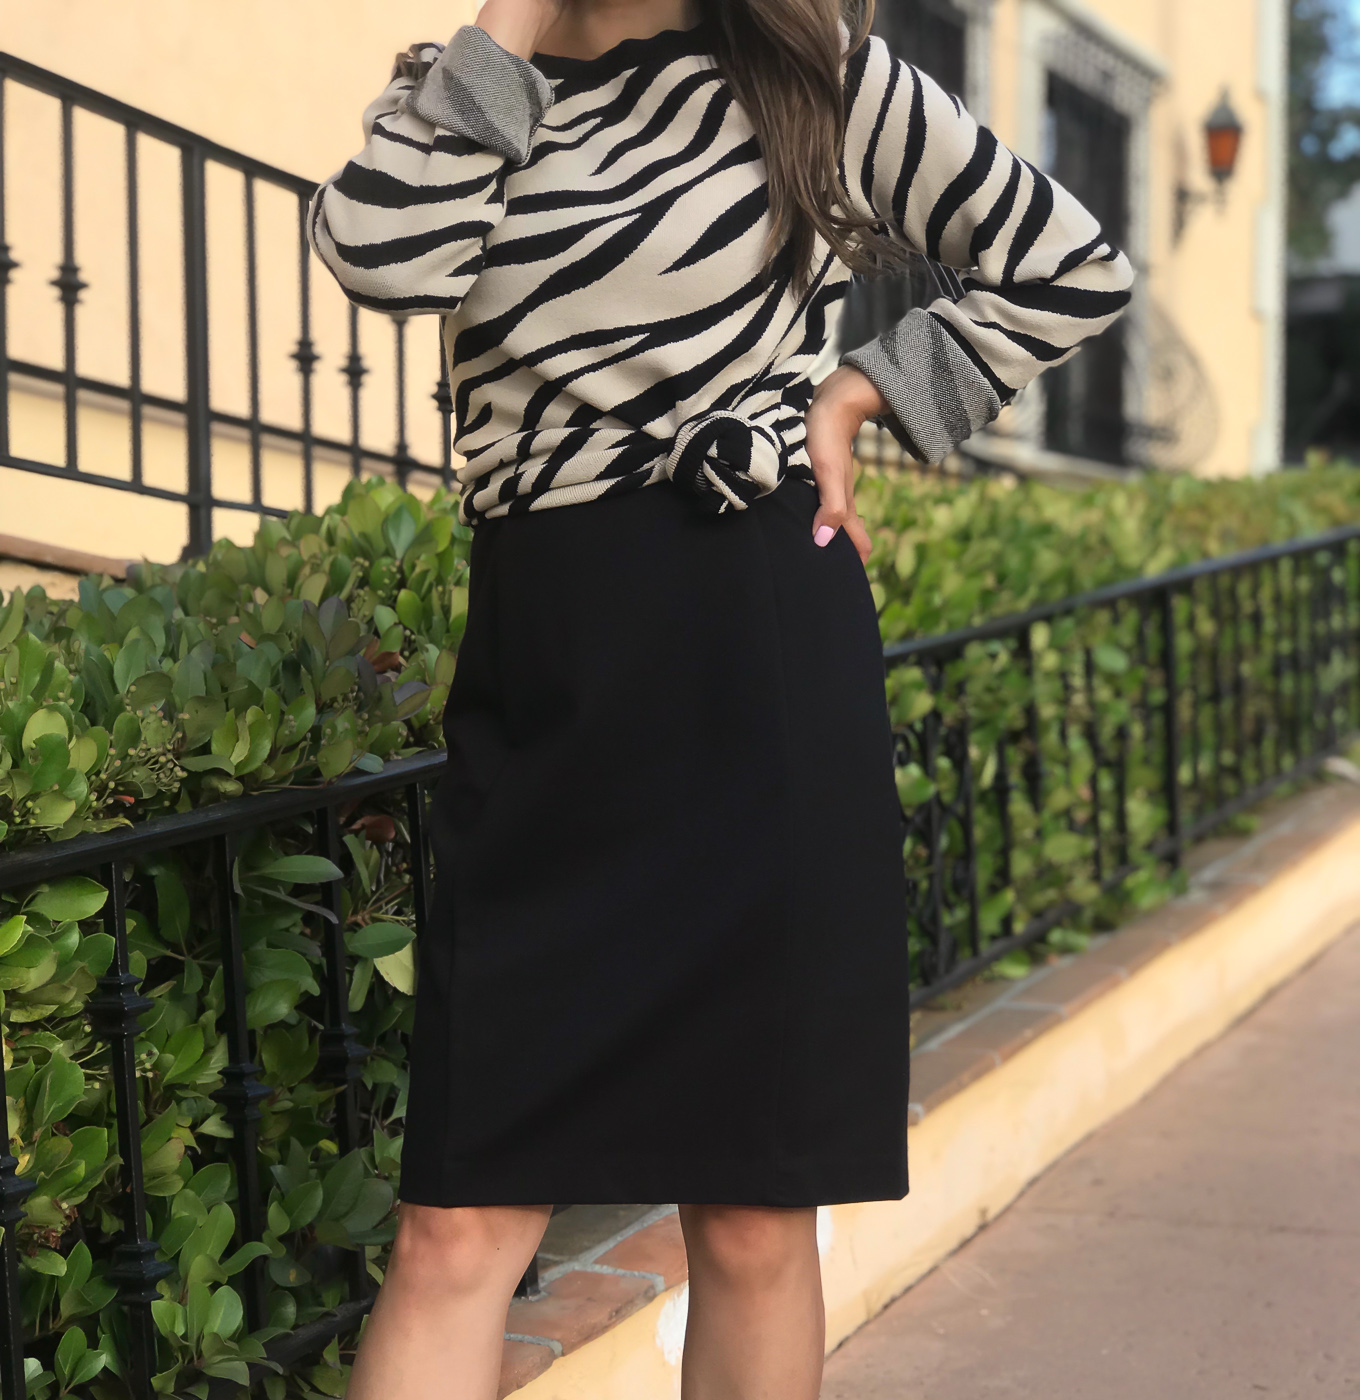 zebra print sweater black sheath dress strappy sandals work outfit